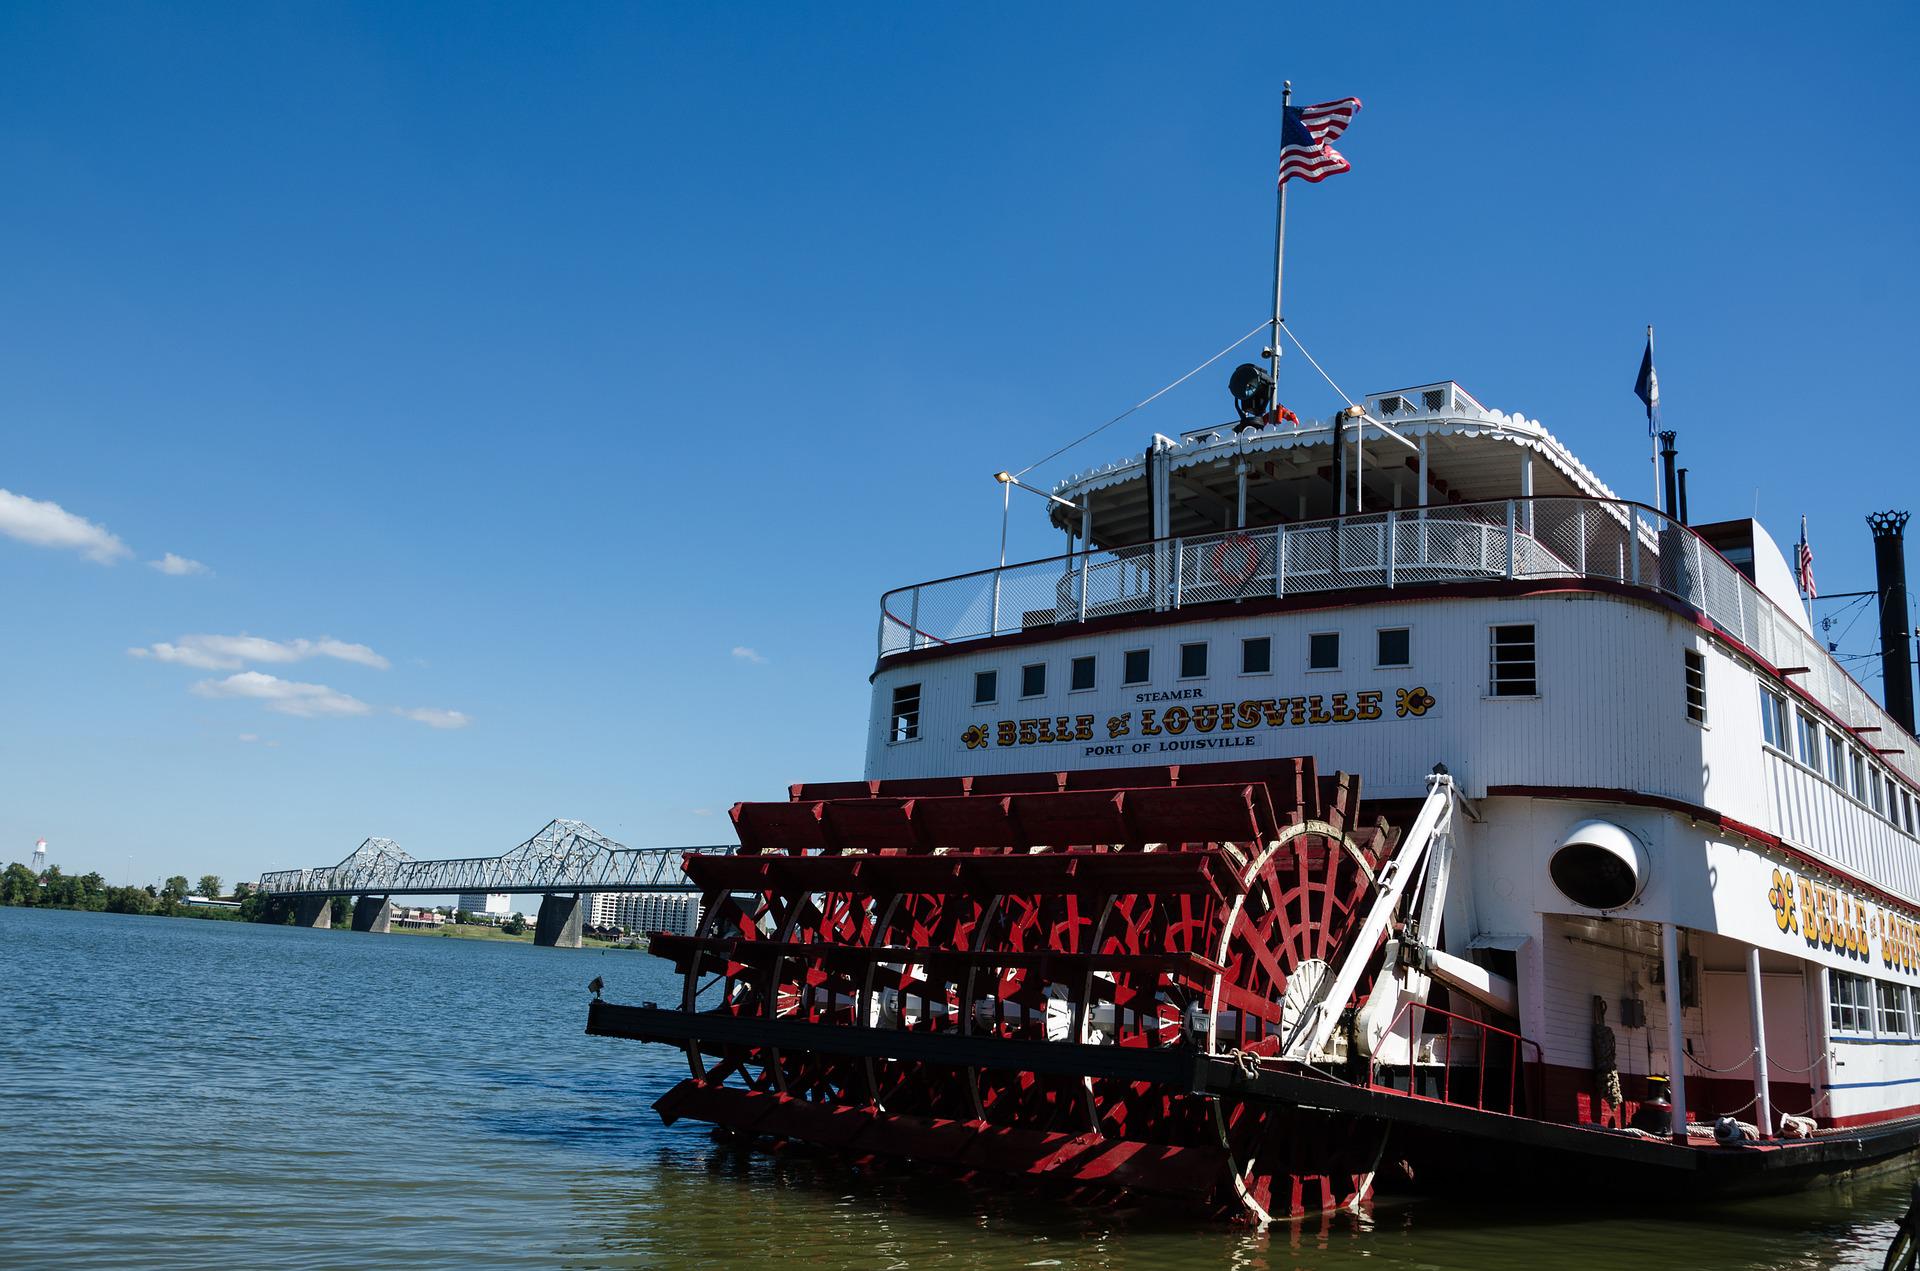 The Belle of Louisville, a popular riverboat in Kentucky